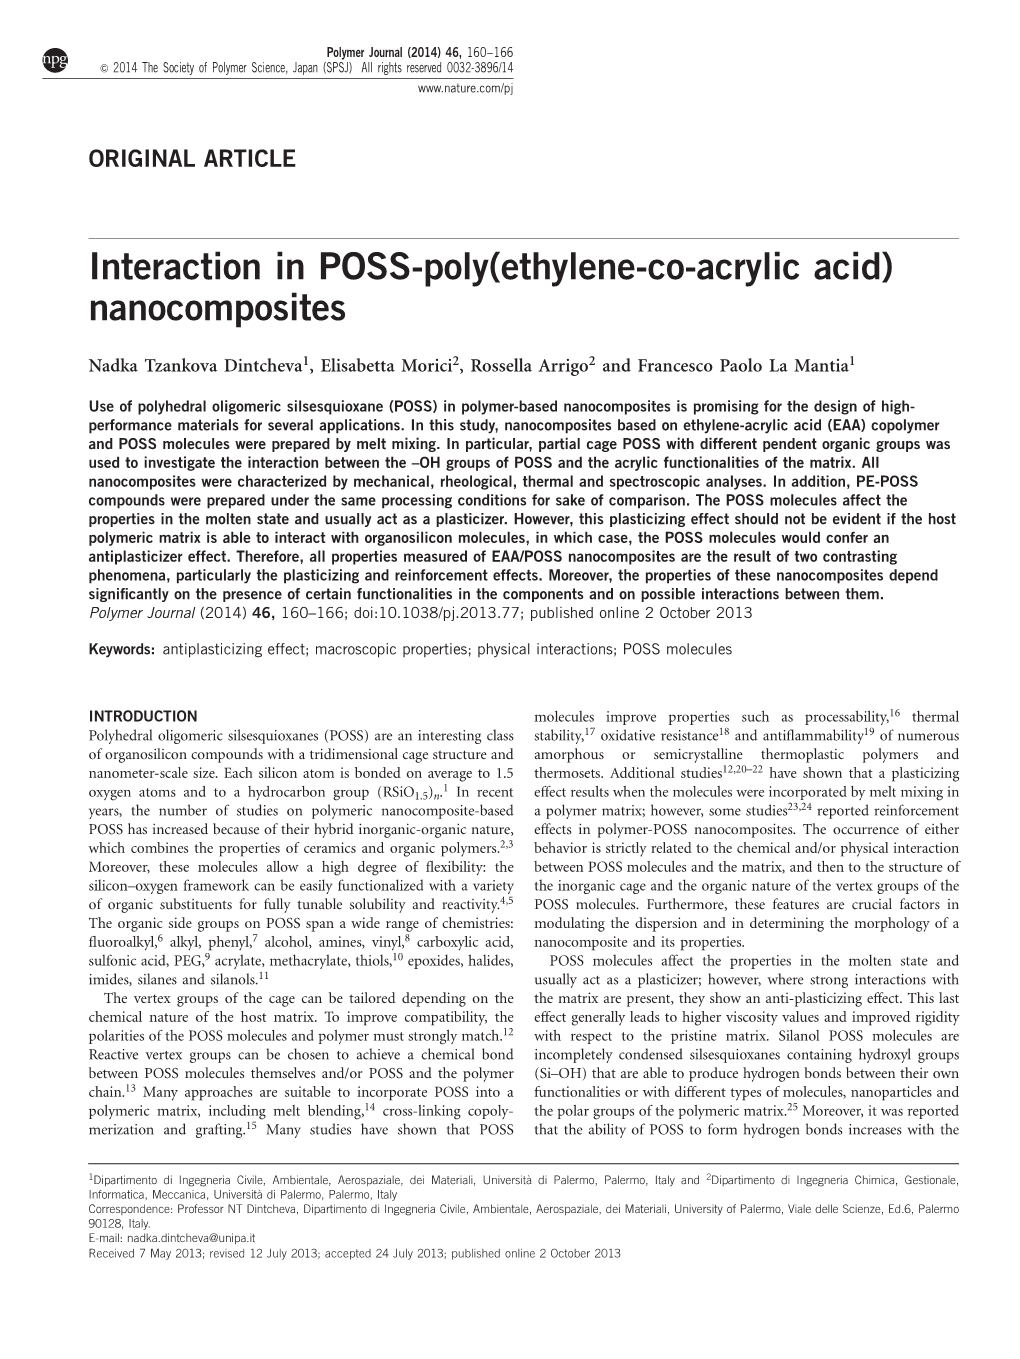 Interaction in POSS-Poly(Ethylene-Co-Acrylic Acid) Nanocomposites